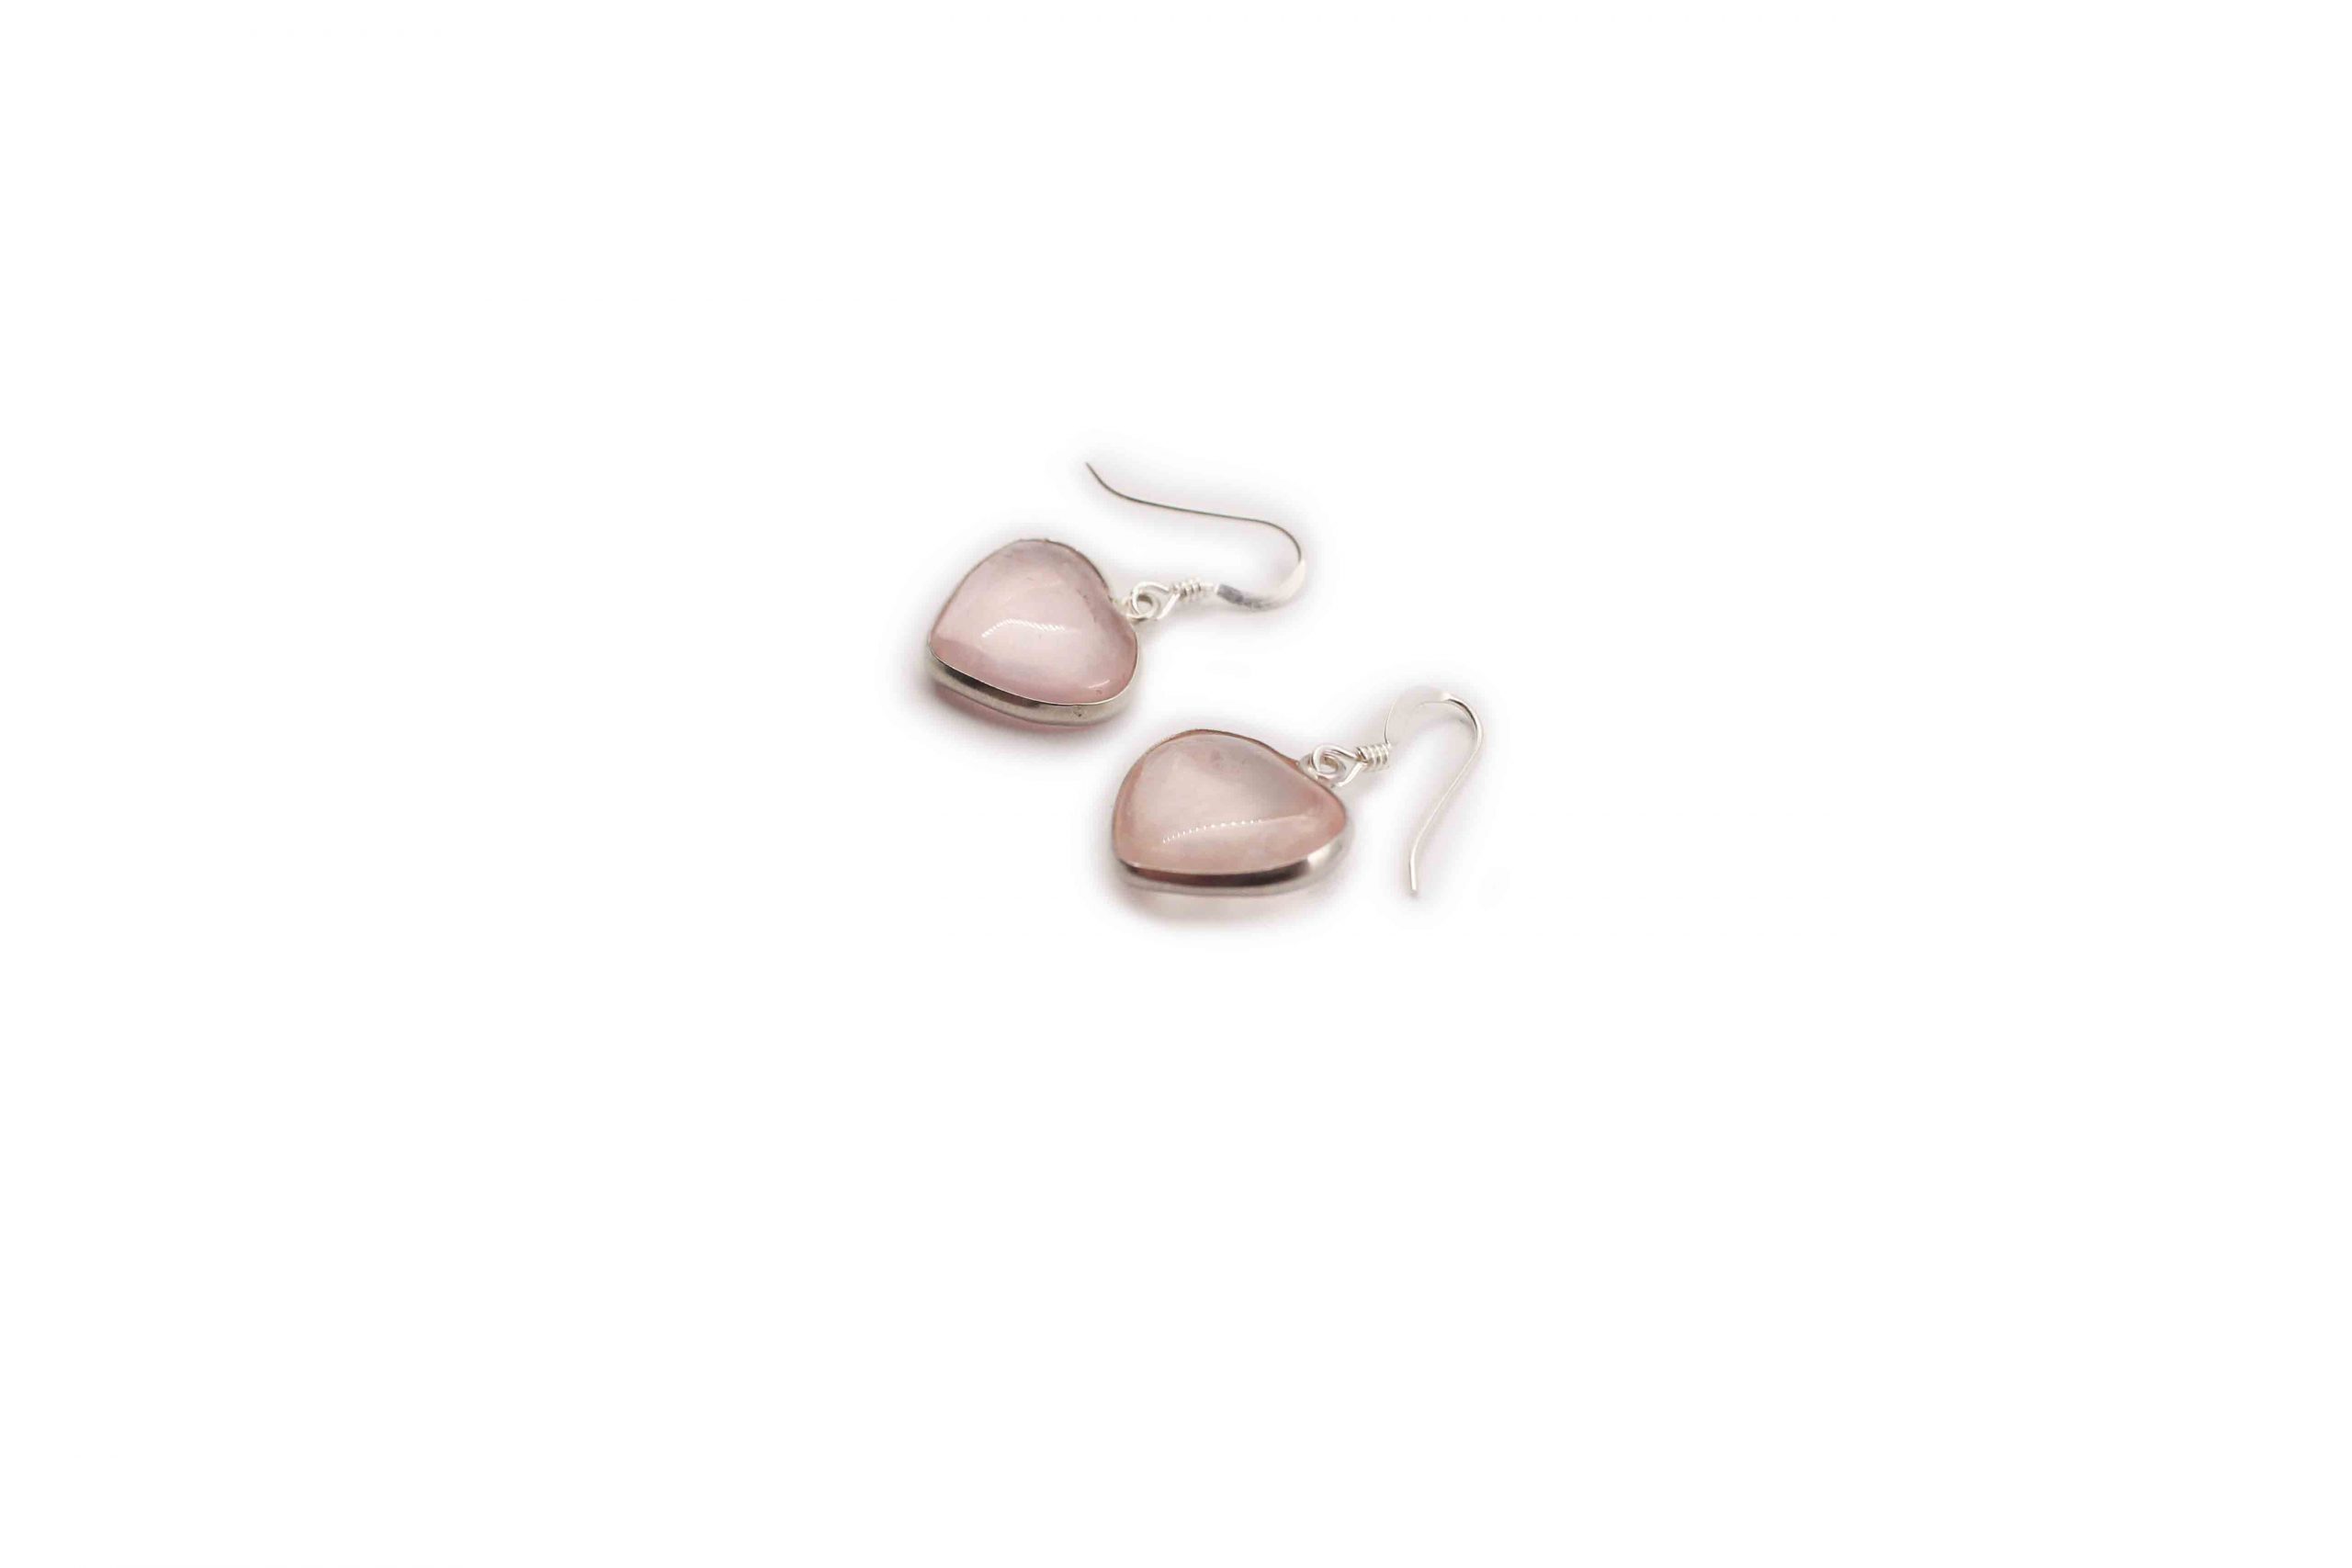 Rose Quartz Single Heart Silver Earrings - Crystal Dreams